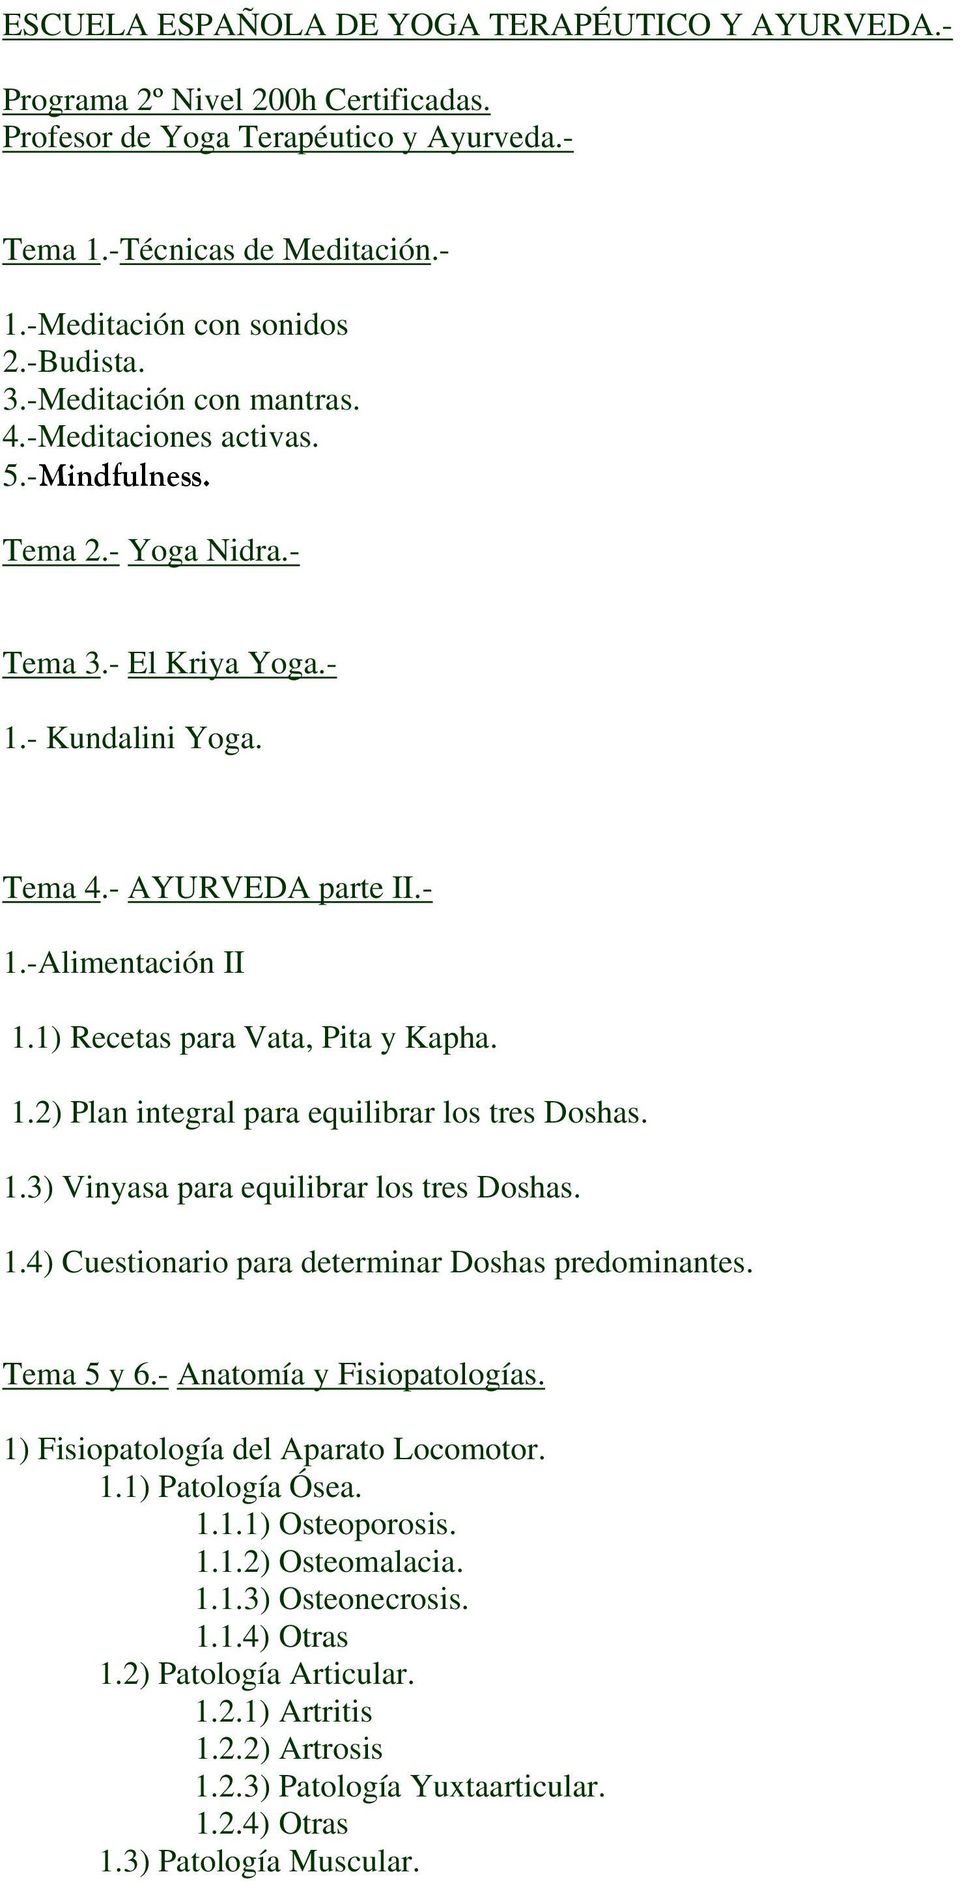 1) Recetas para Vata, Pita y Kapha. 1.2) Plan integral para equilibrar los tres Doshas. 1.3) Vinyasa para equilibrar los tres Doshas. 1.4) Cuestionario para determinar Doshas predominantes.